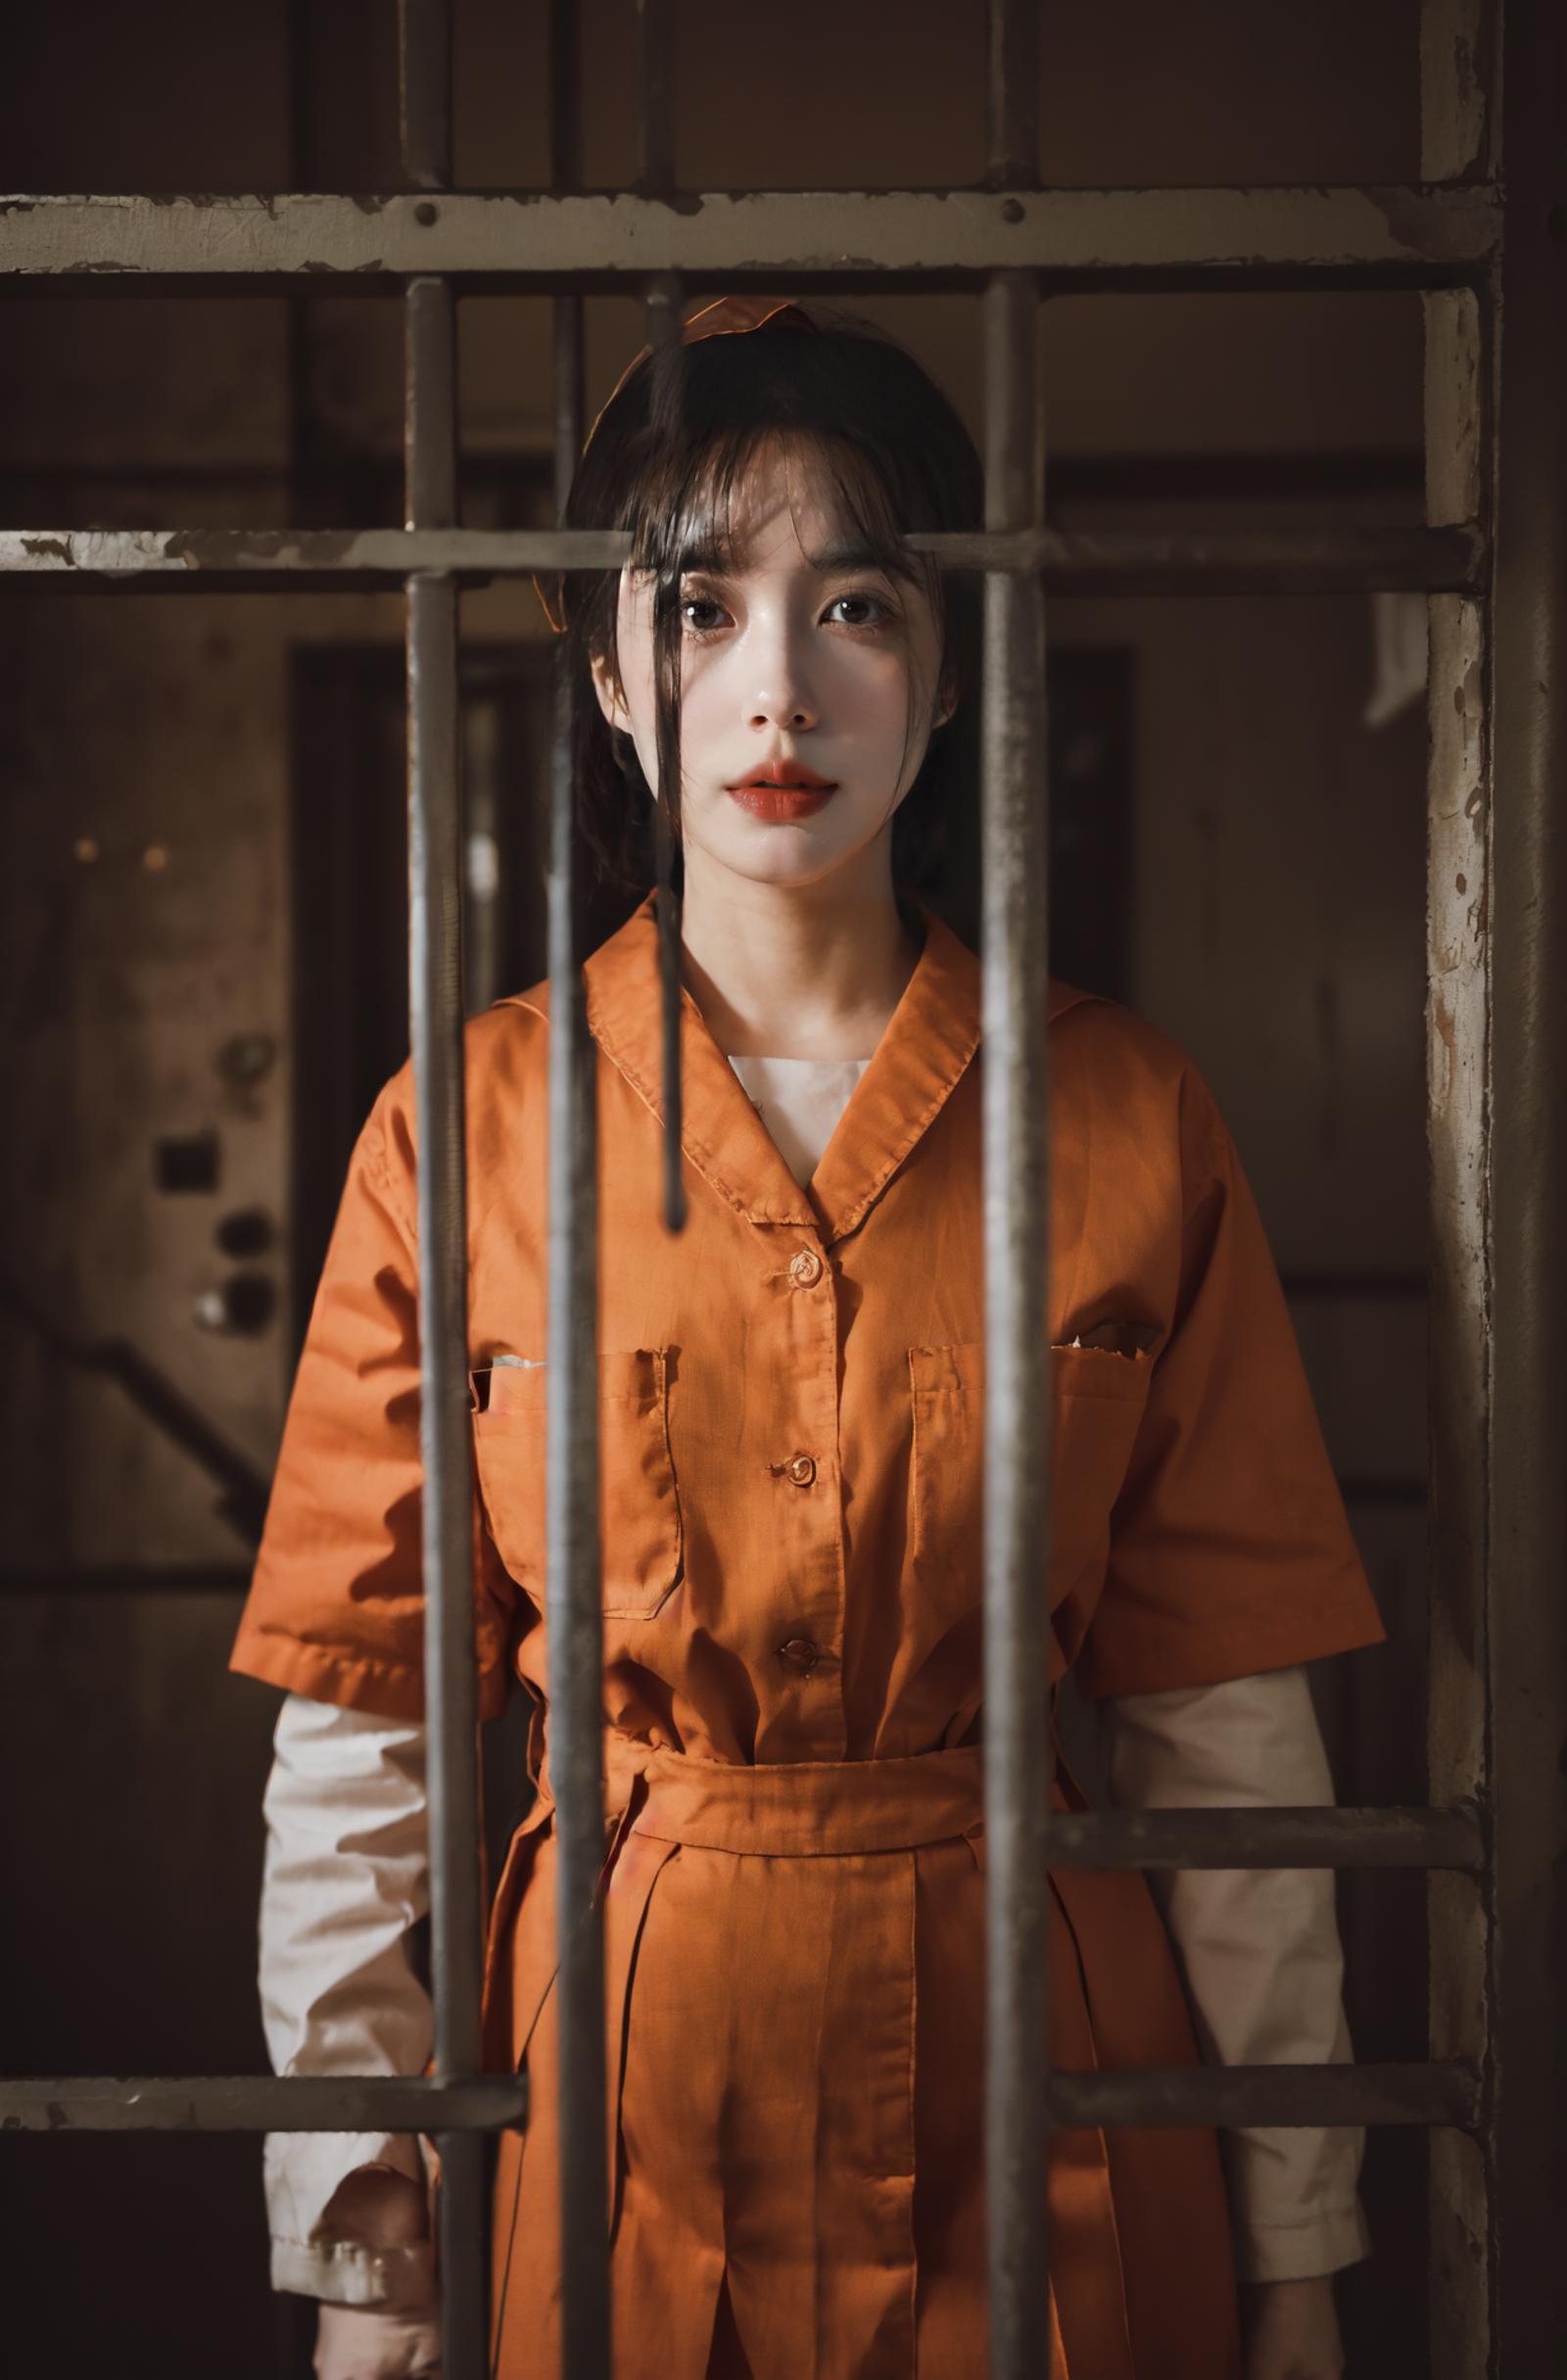 prison | 监狱 image by Benlo